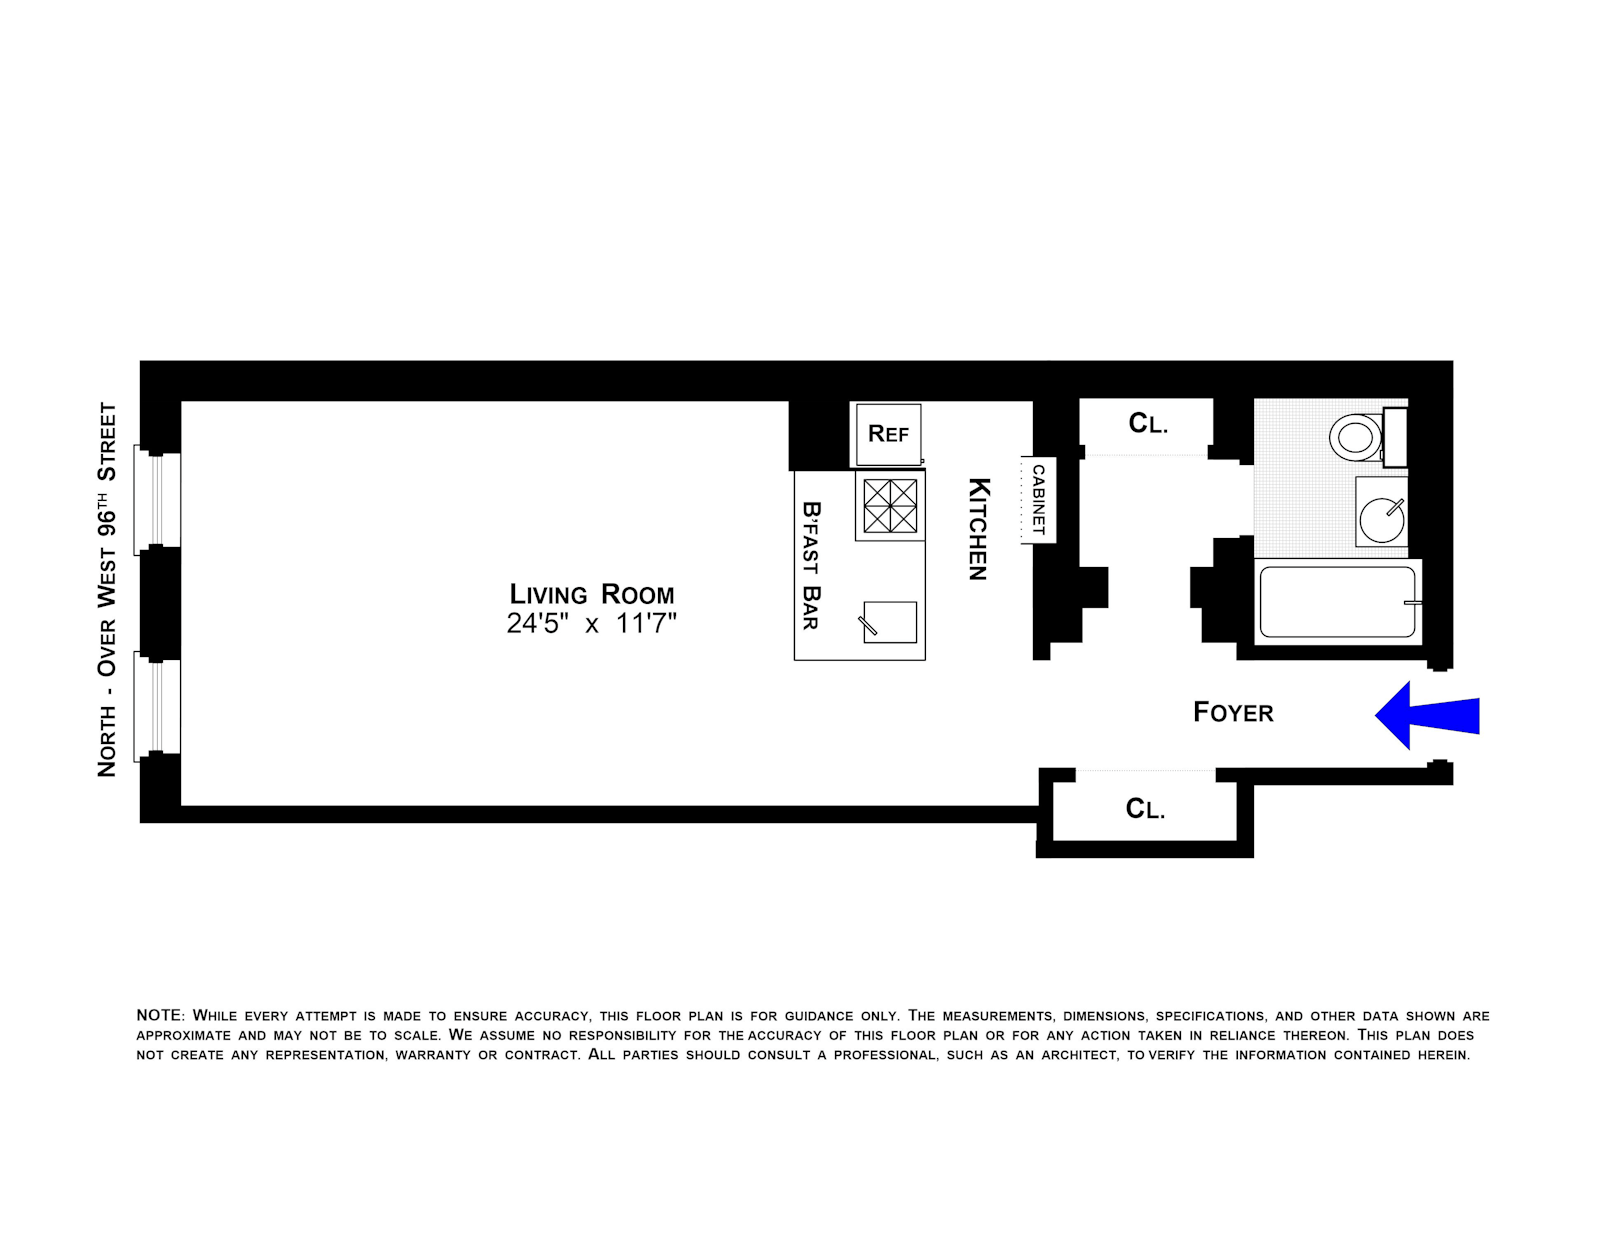 Floorplan for 126 West 96th Street, 3B